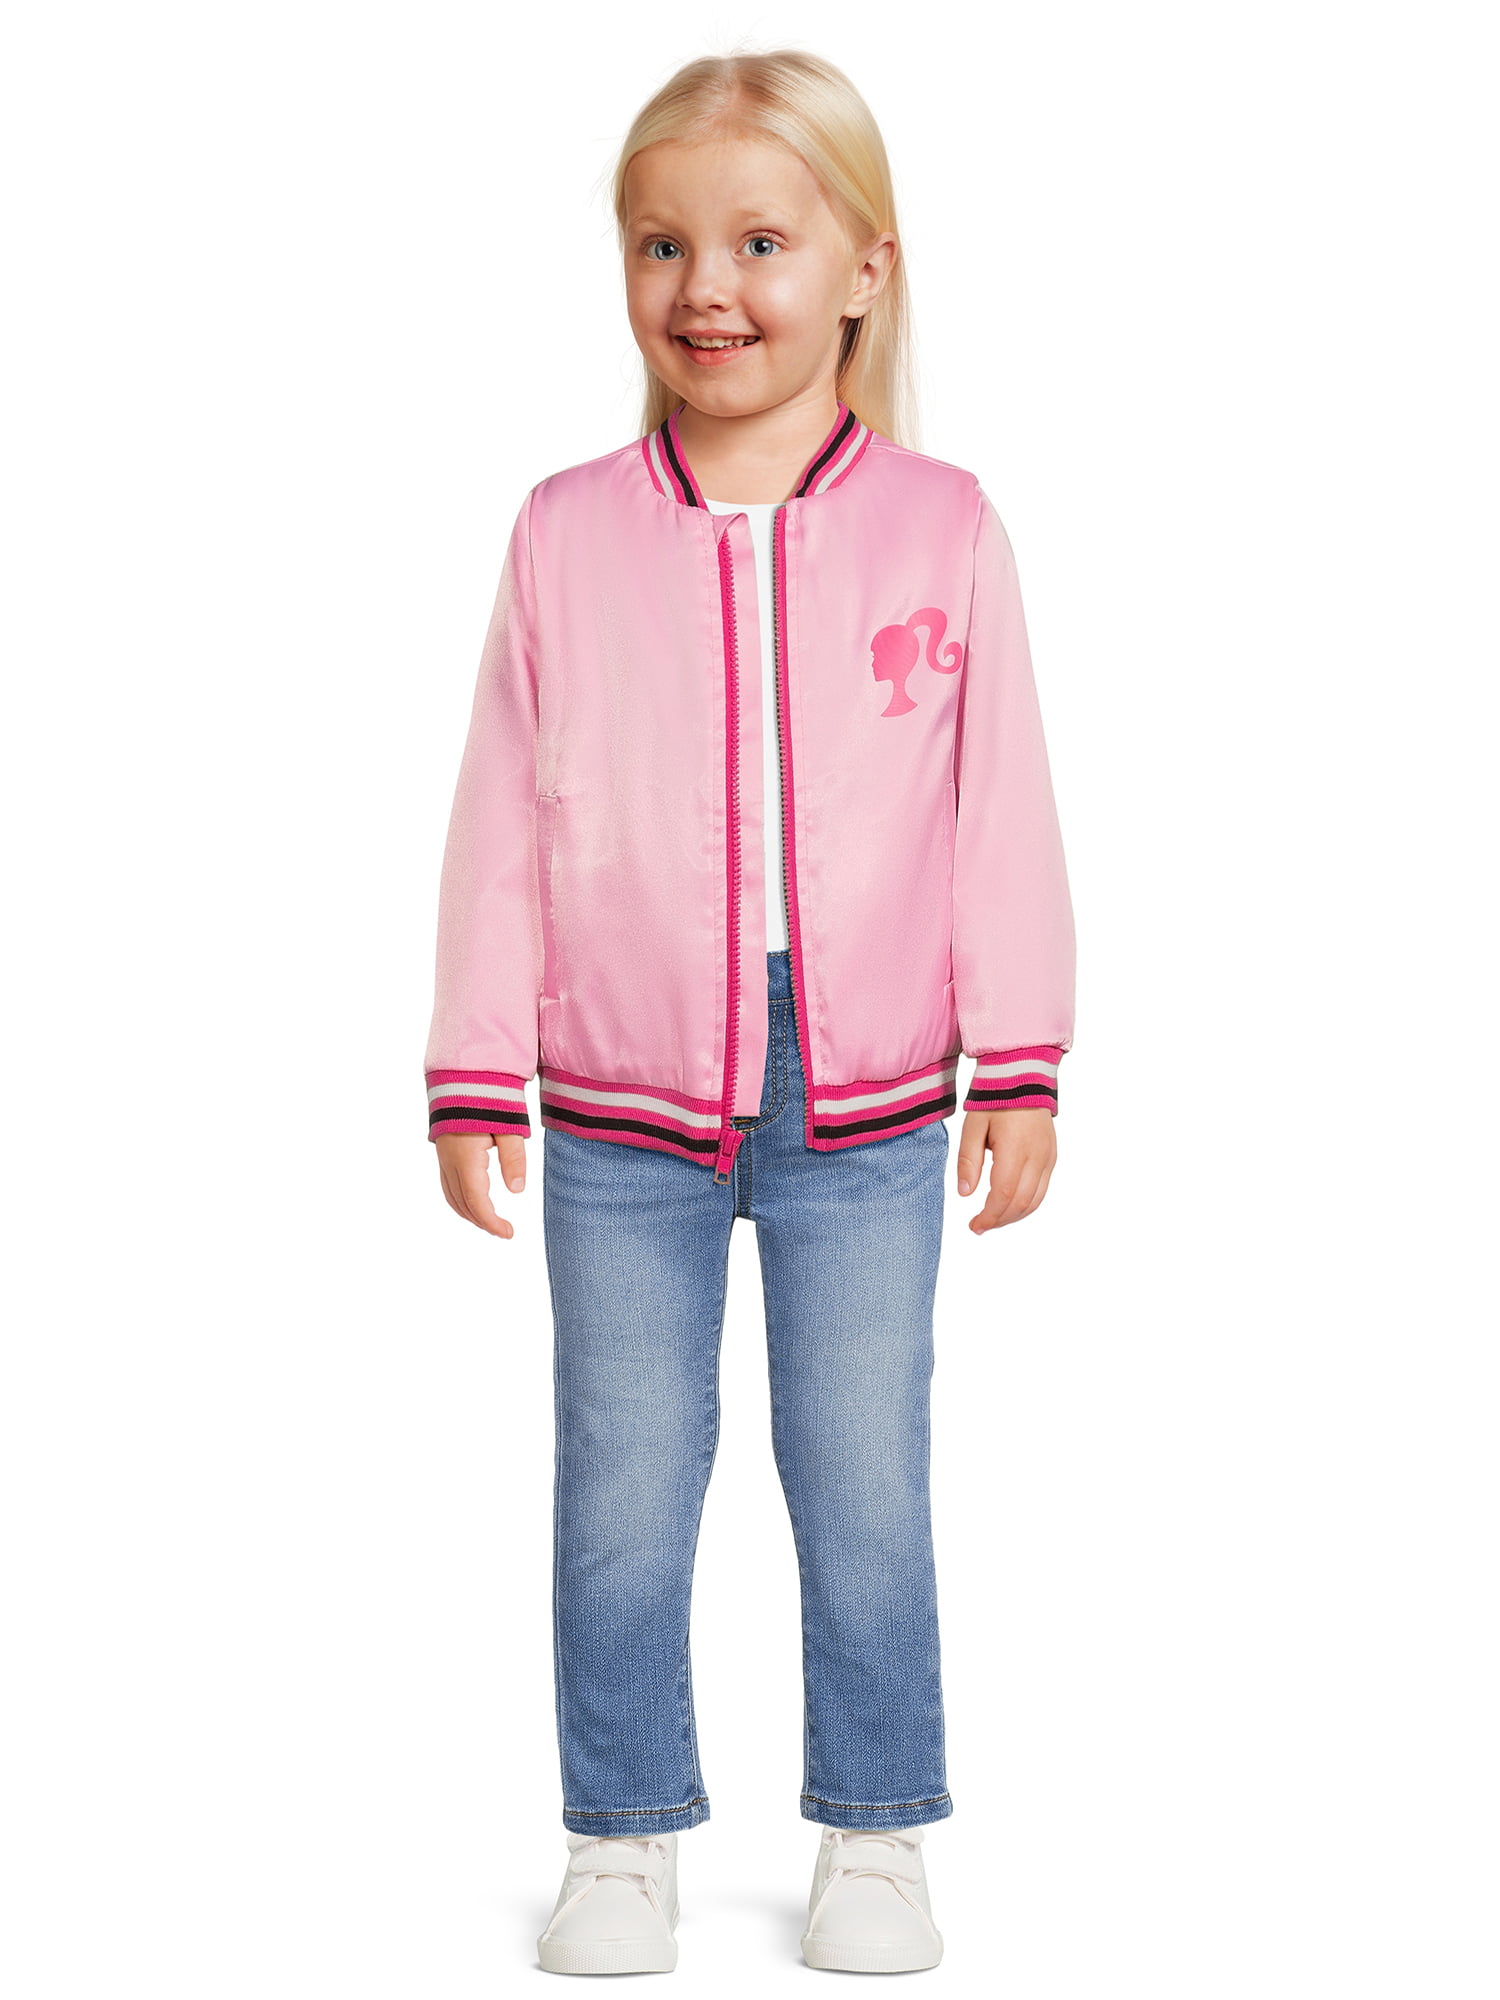 Toddler Varsity Jacket Personalized Kids Jacket Best Seller